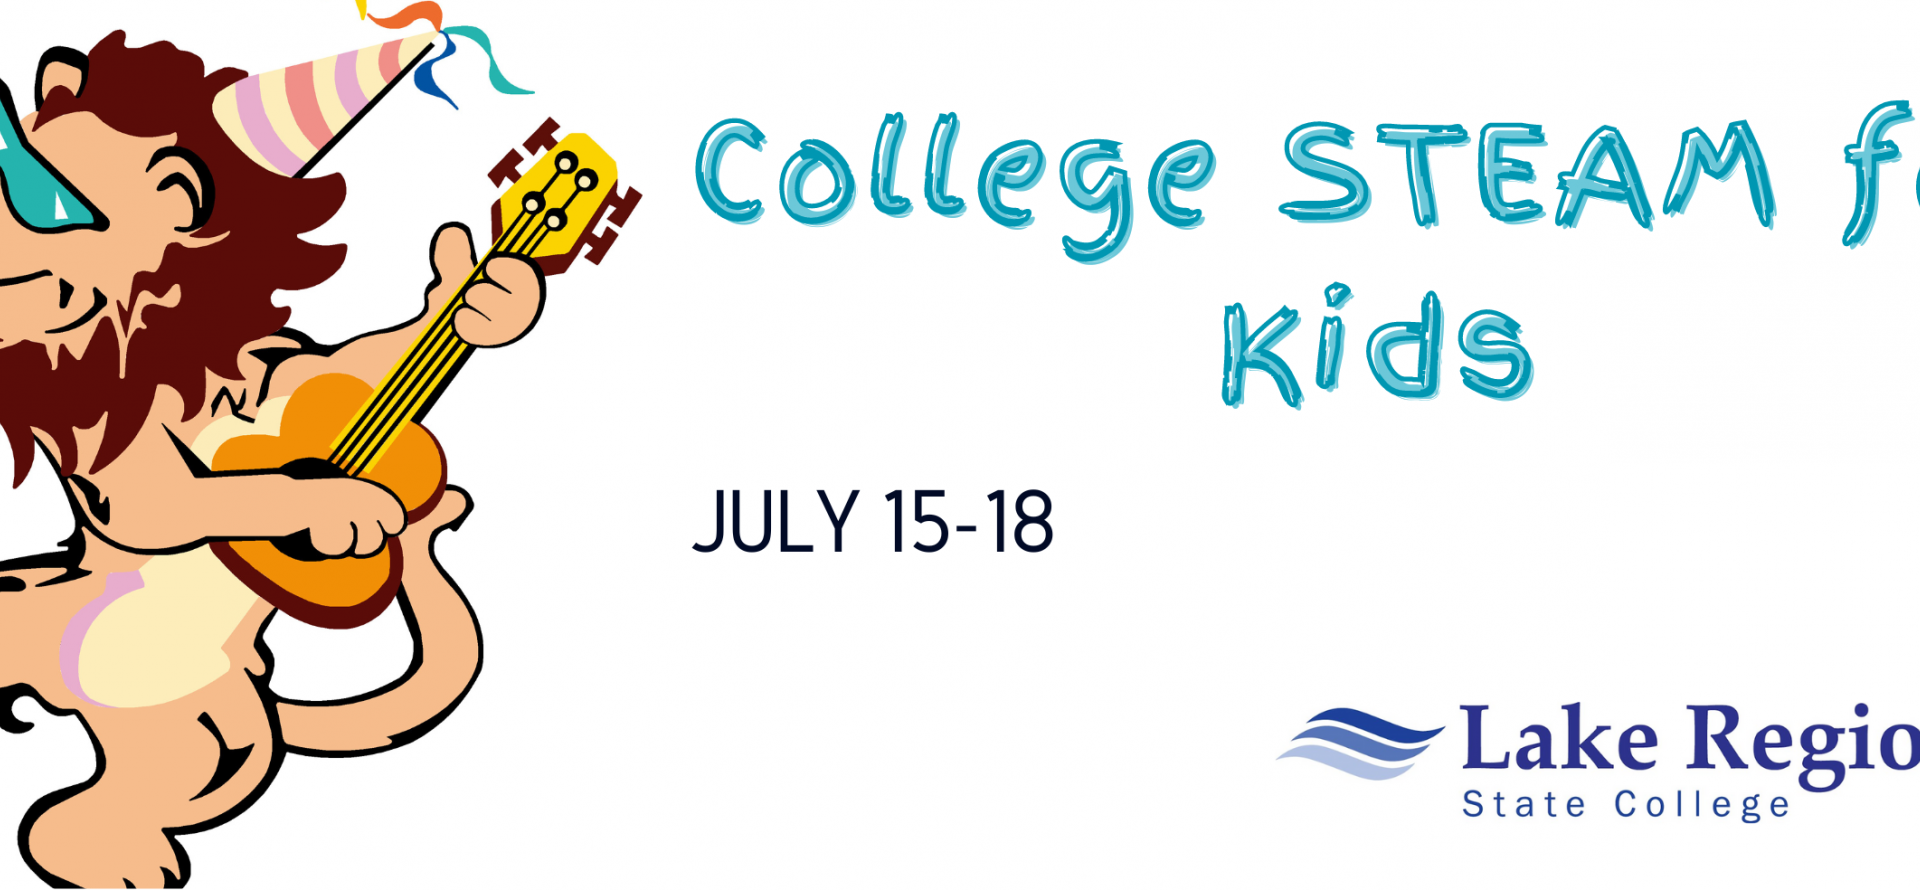 Collge STEAM for Kids July 15-18